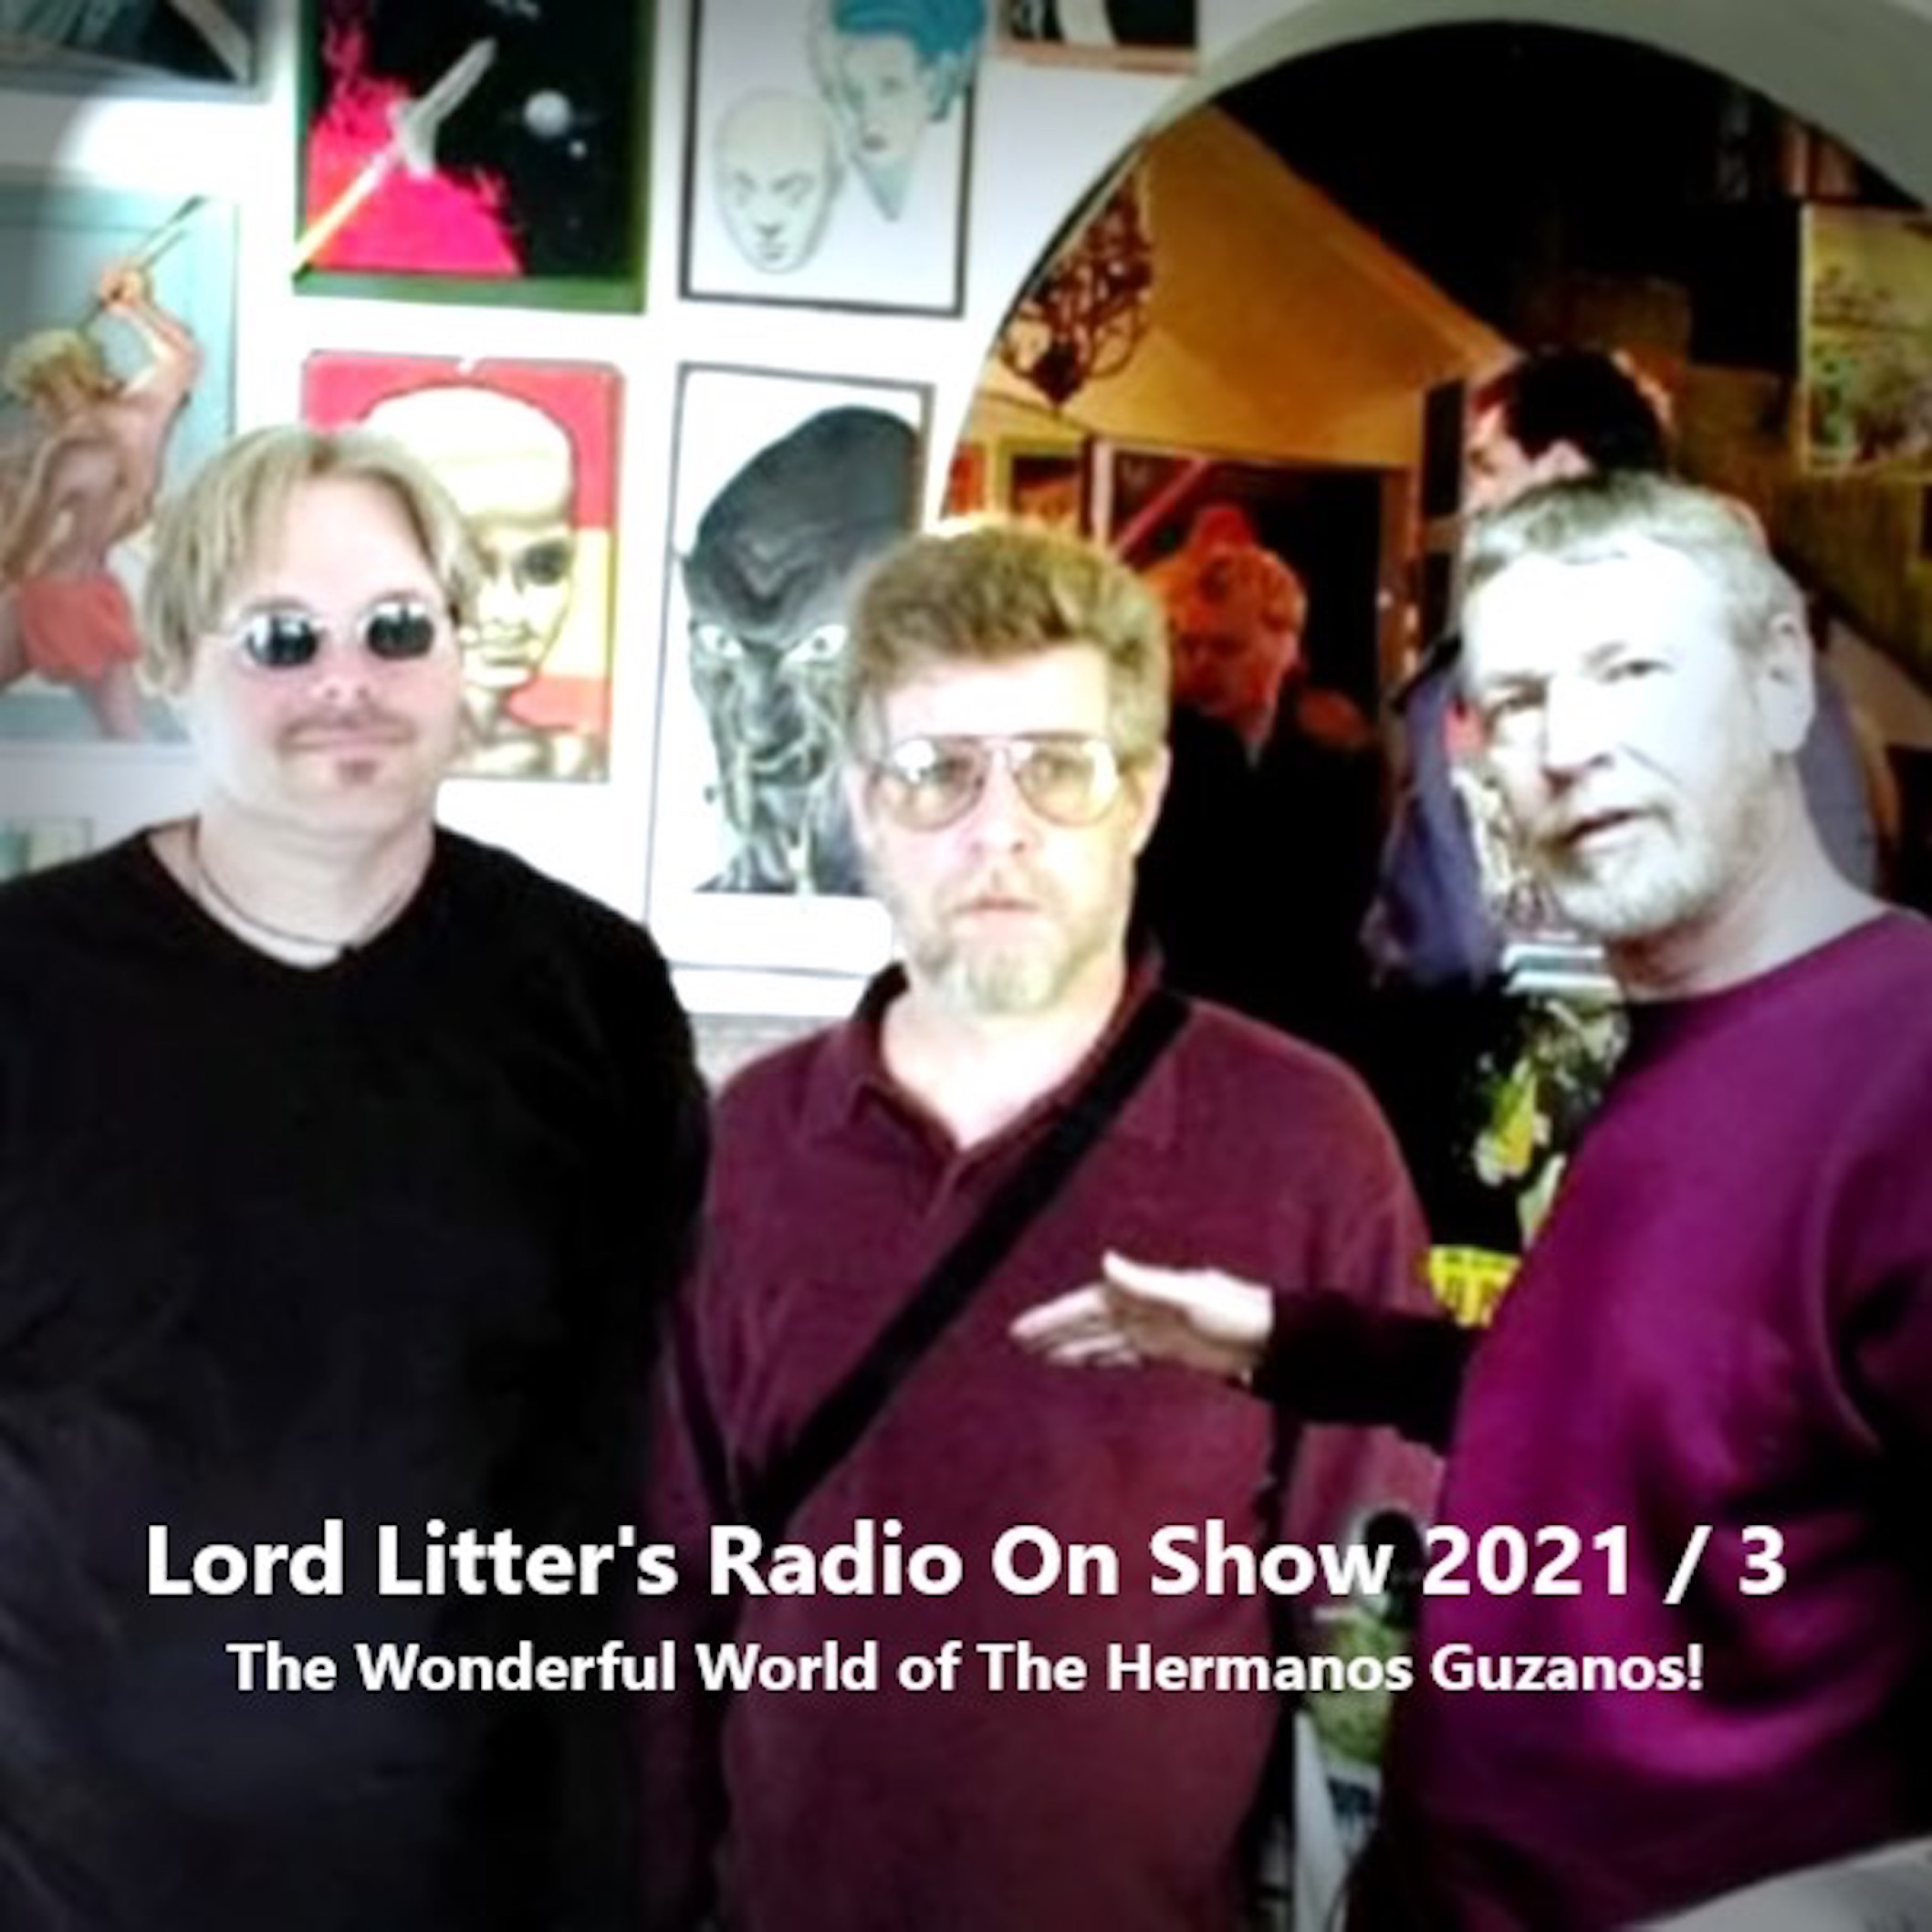 Lord Litter’s Radio On Show – The wonderful world of The Hermanos Guzanos